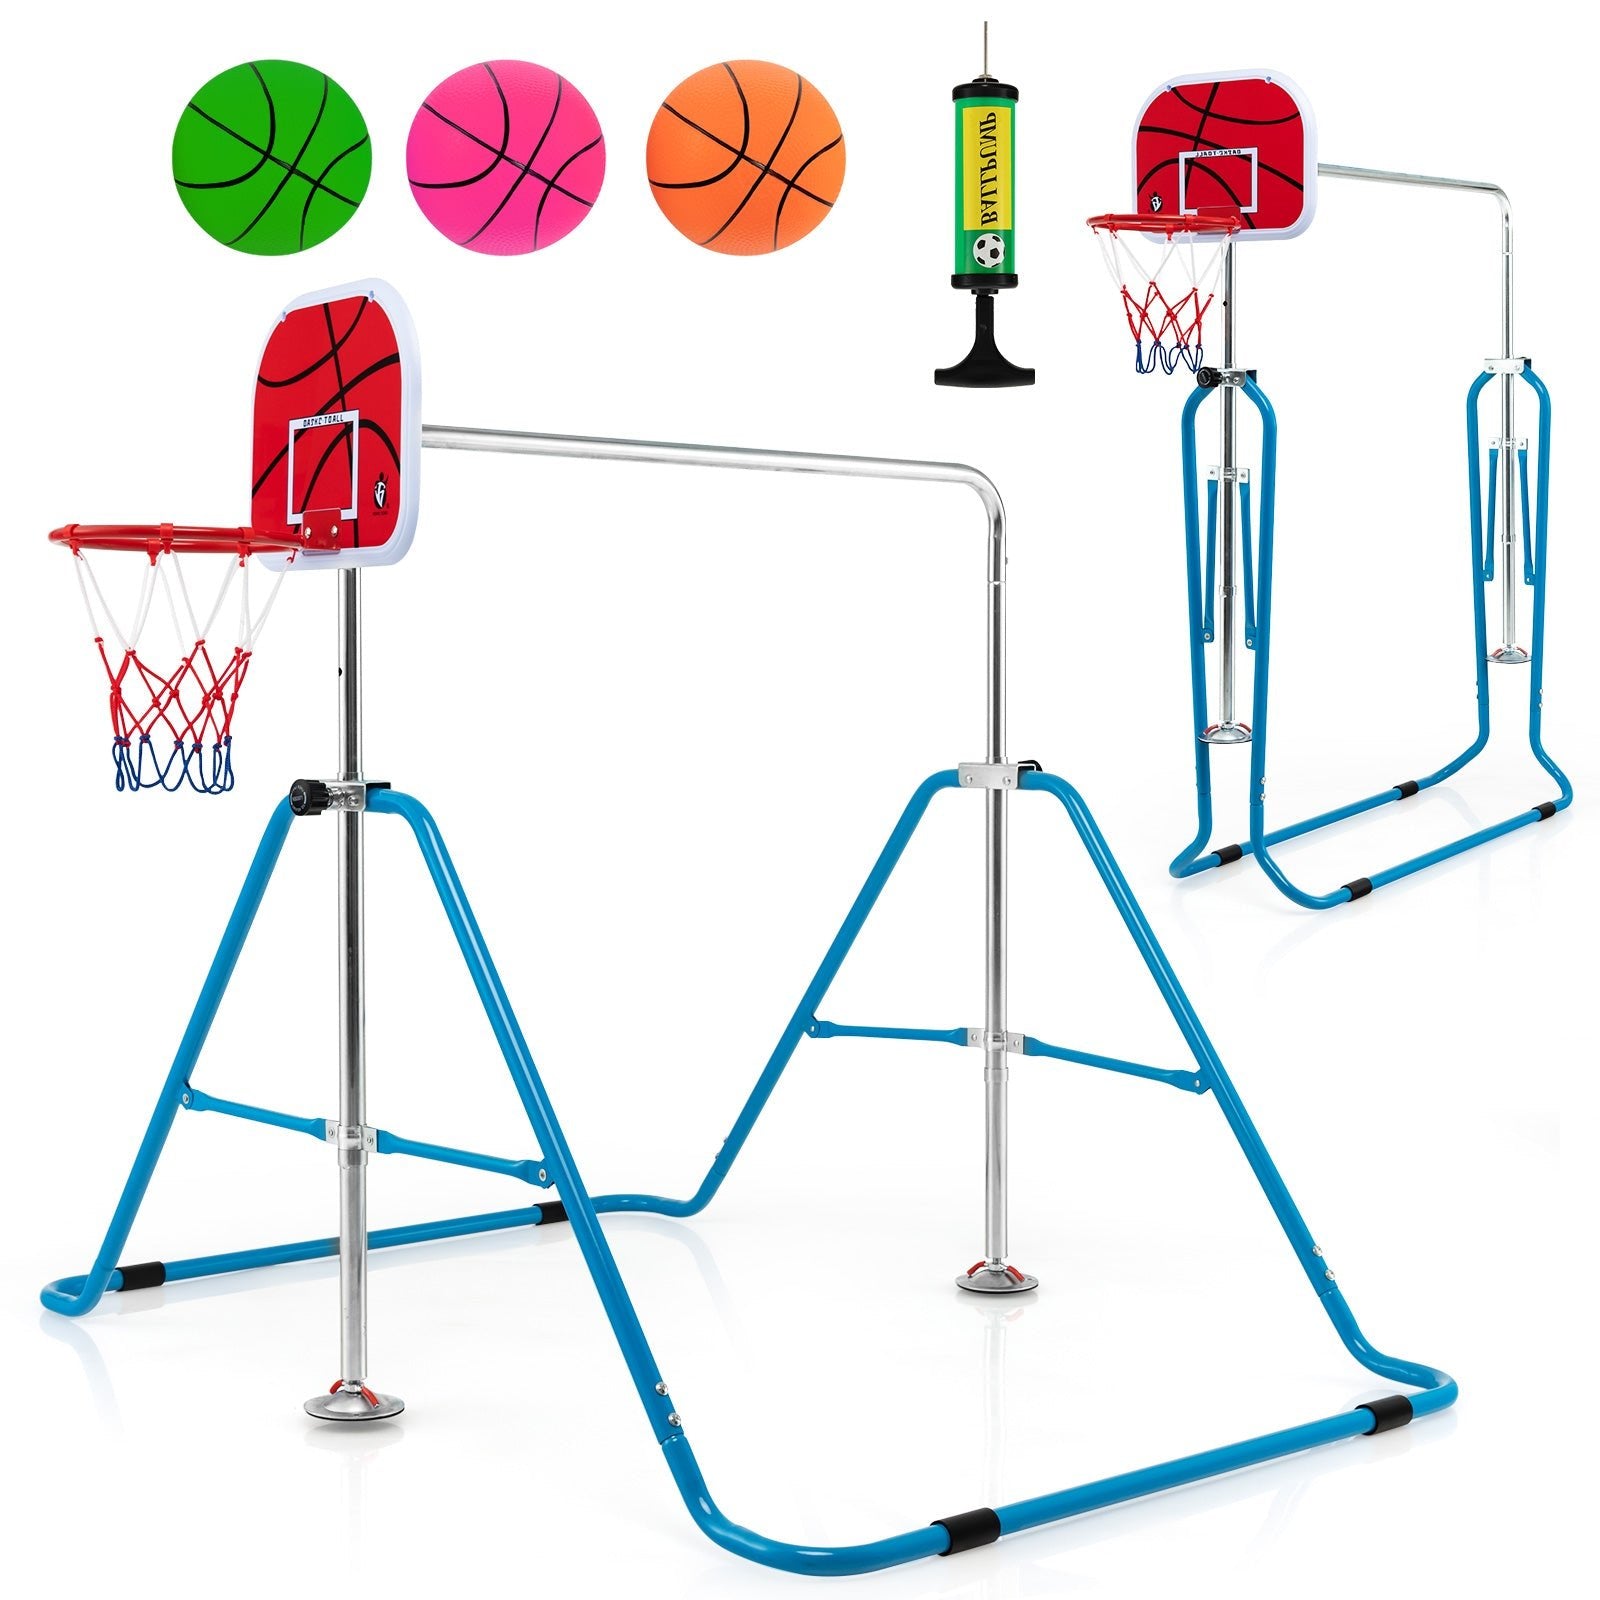 Junior Gymnastics Training Bar with Basketball Hoop: Foldable and Playful Blue